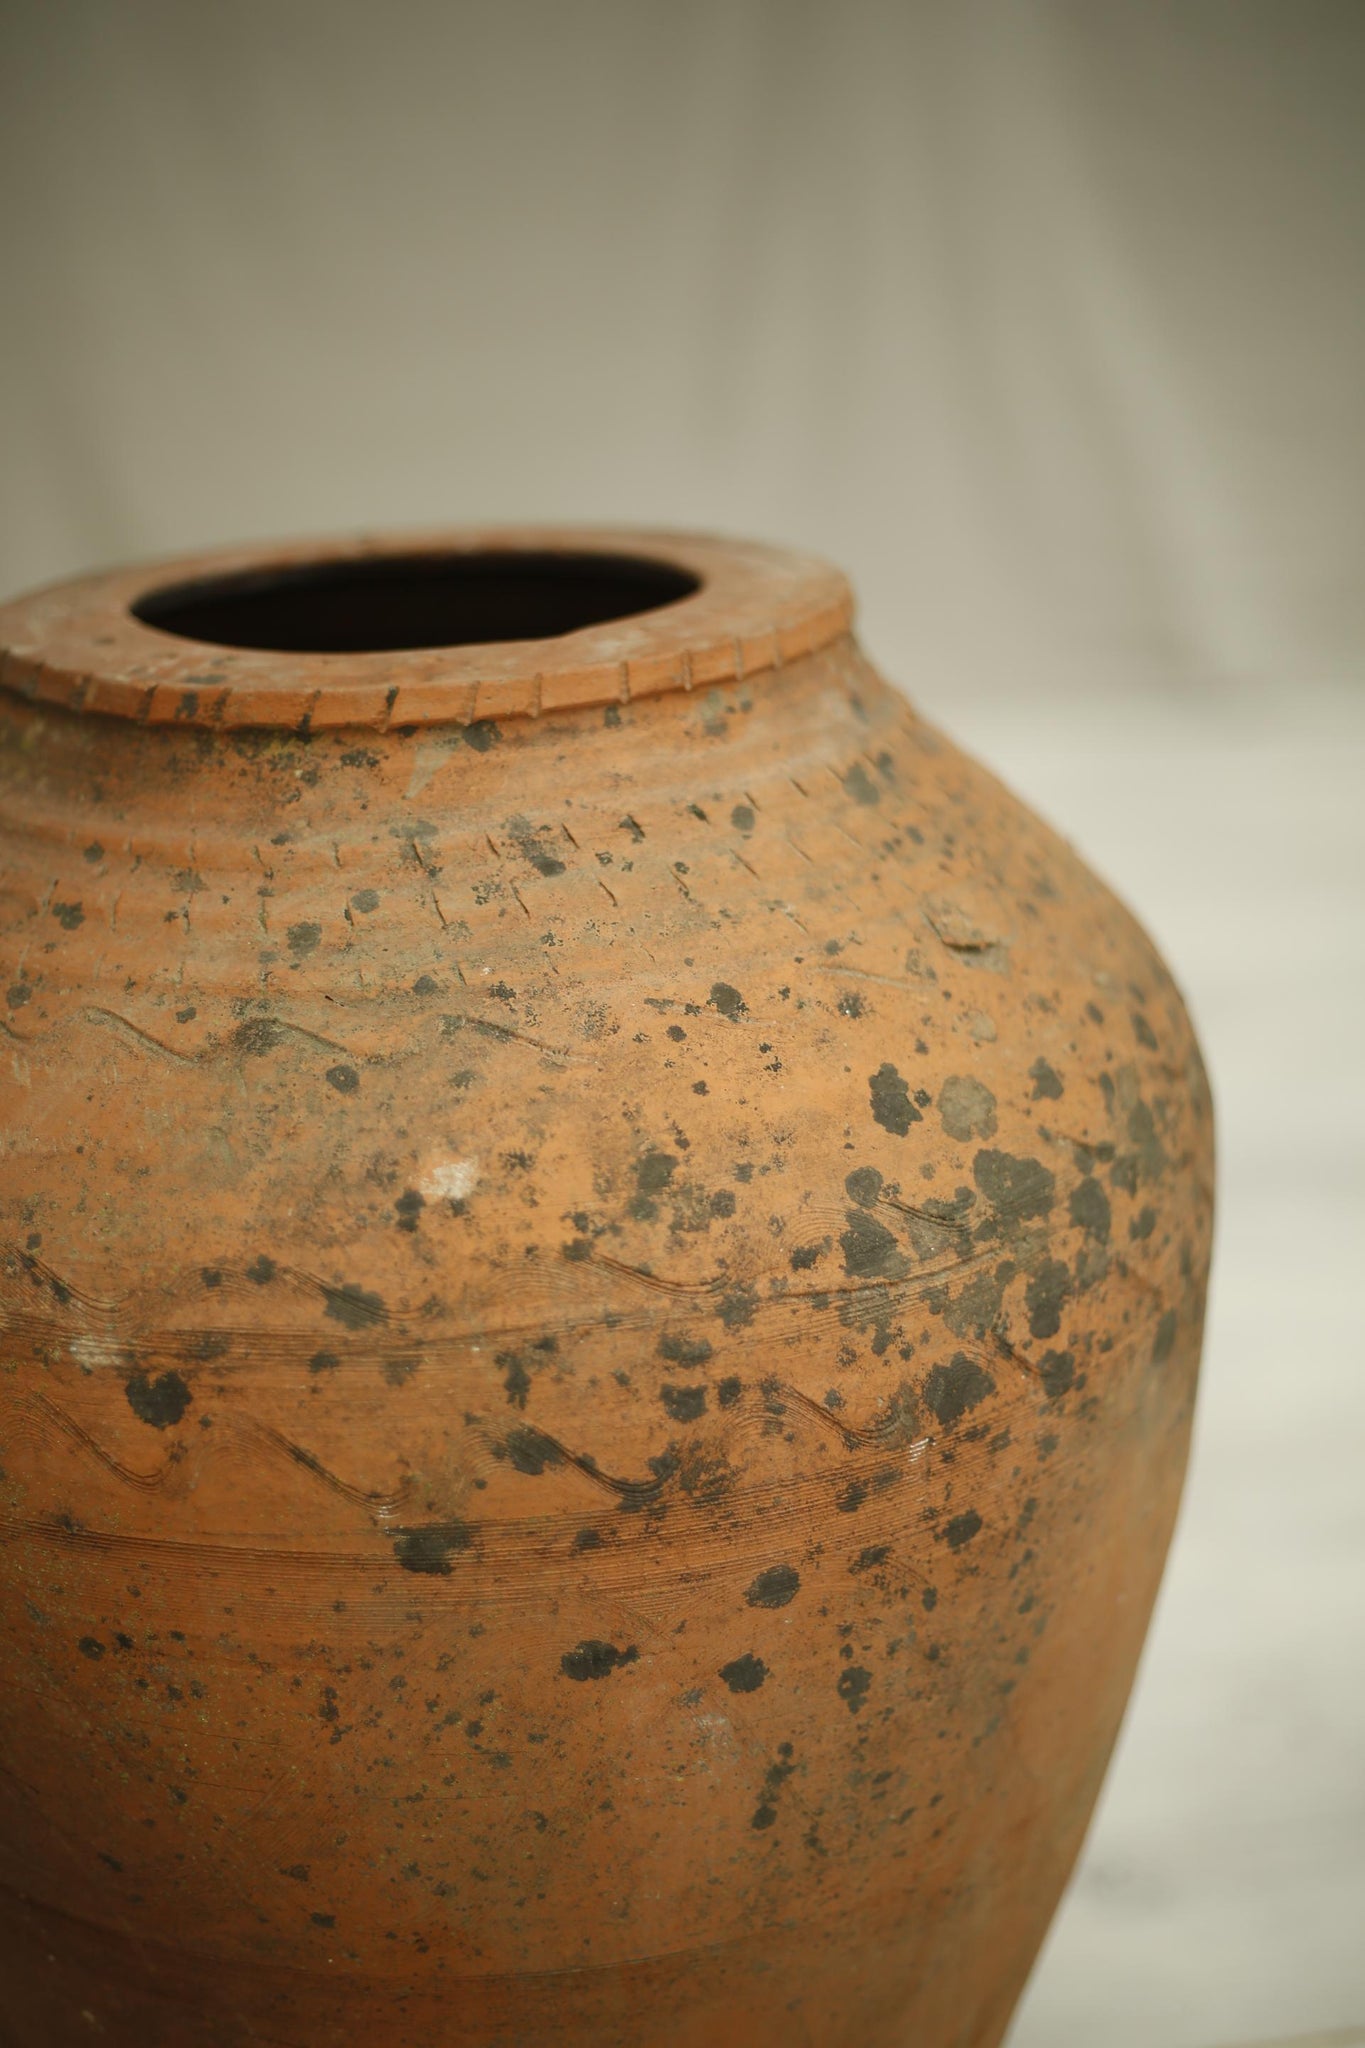 Early 20th century Turkish olive pot No12 - TallBoy Interiors